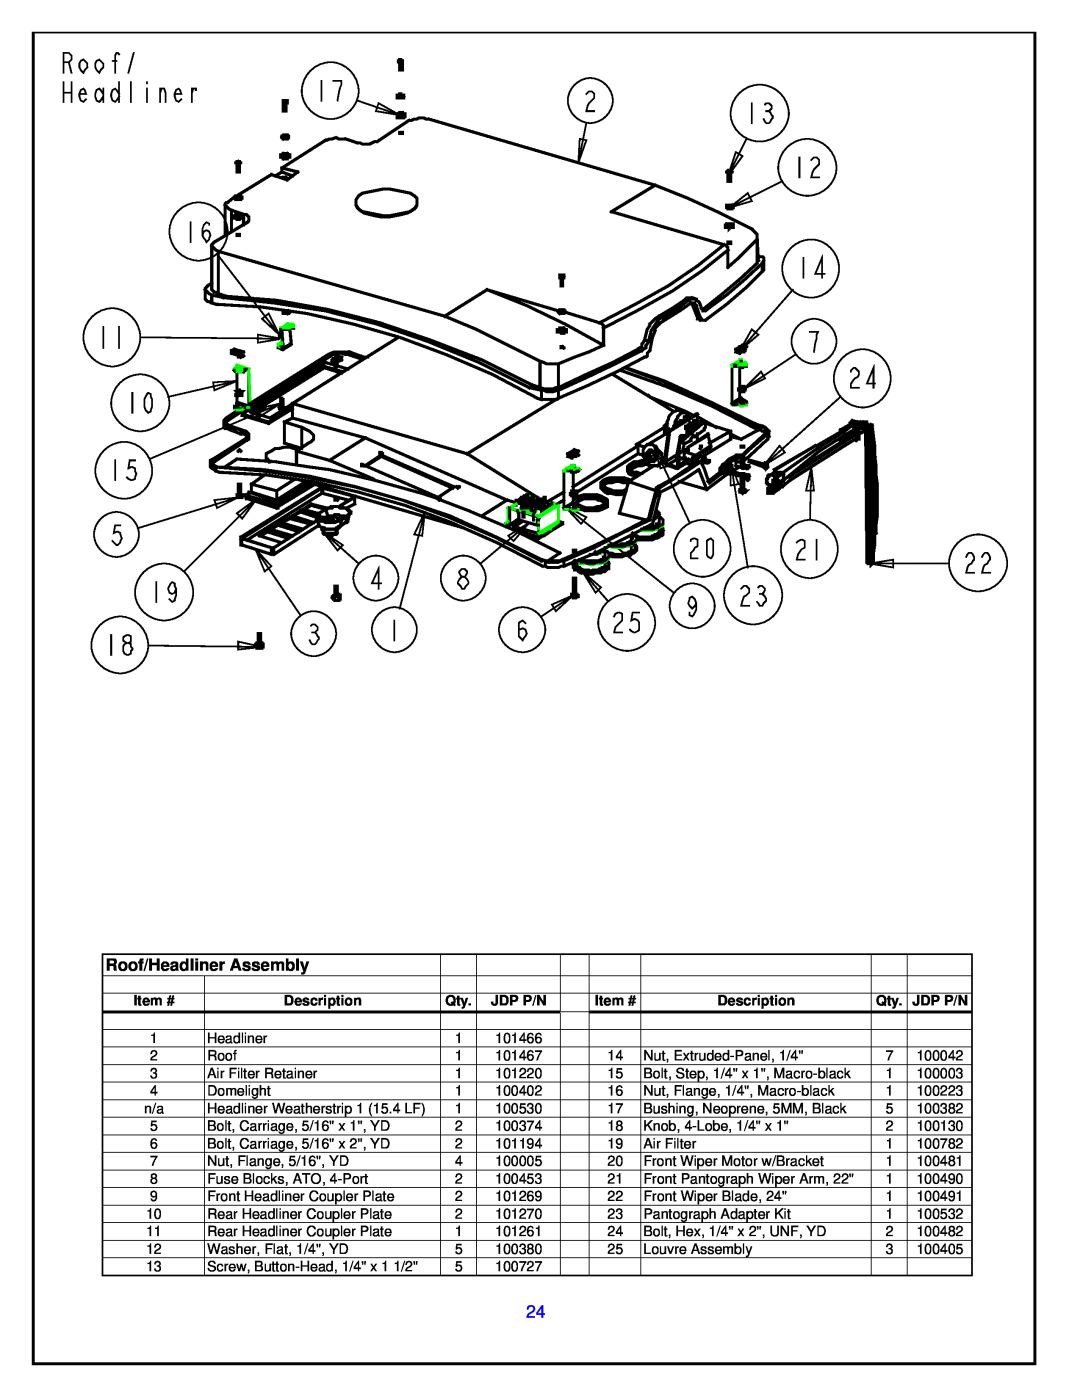 Toro ROPS HARD CAB, 30391 manual Roof/Headliner Assembly, Description, Jdp P/N 